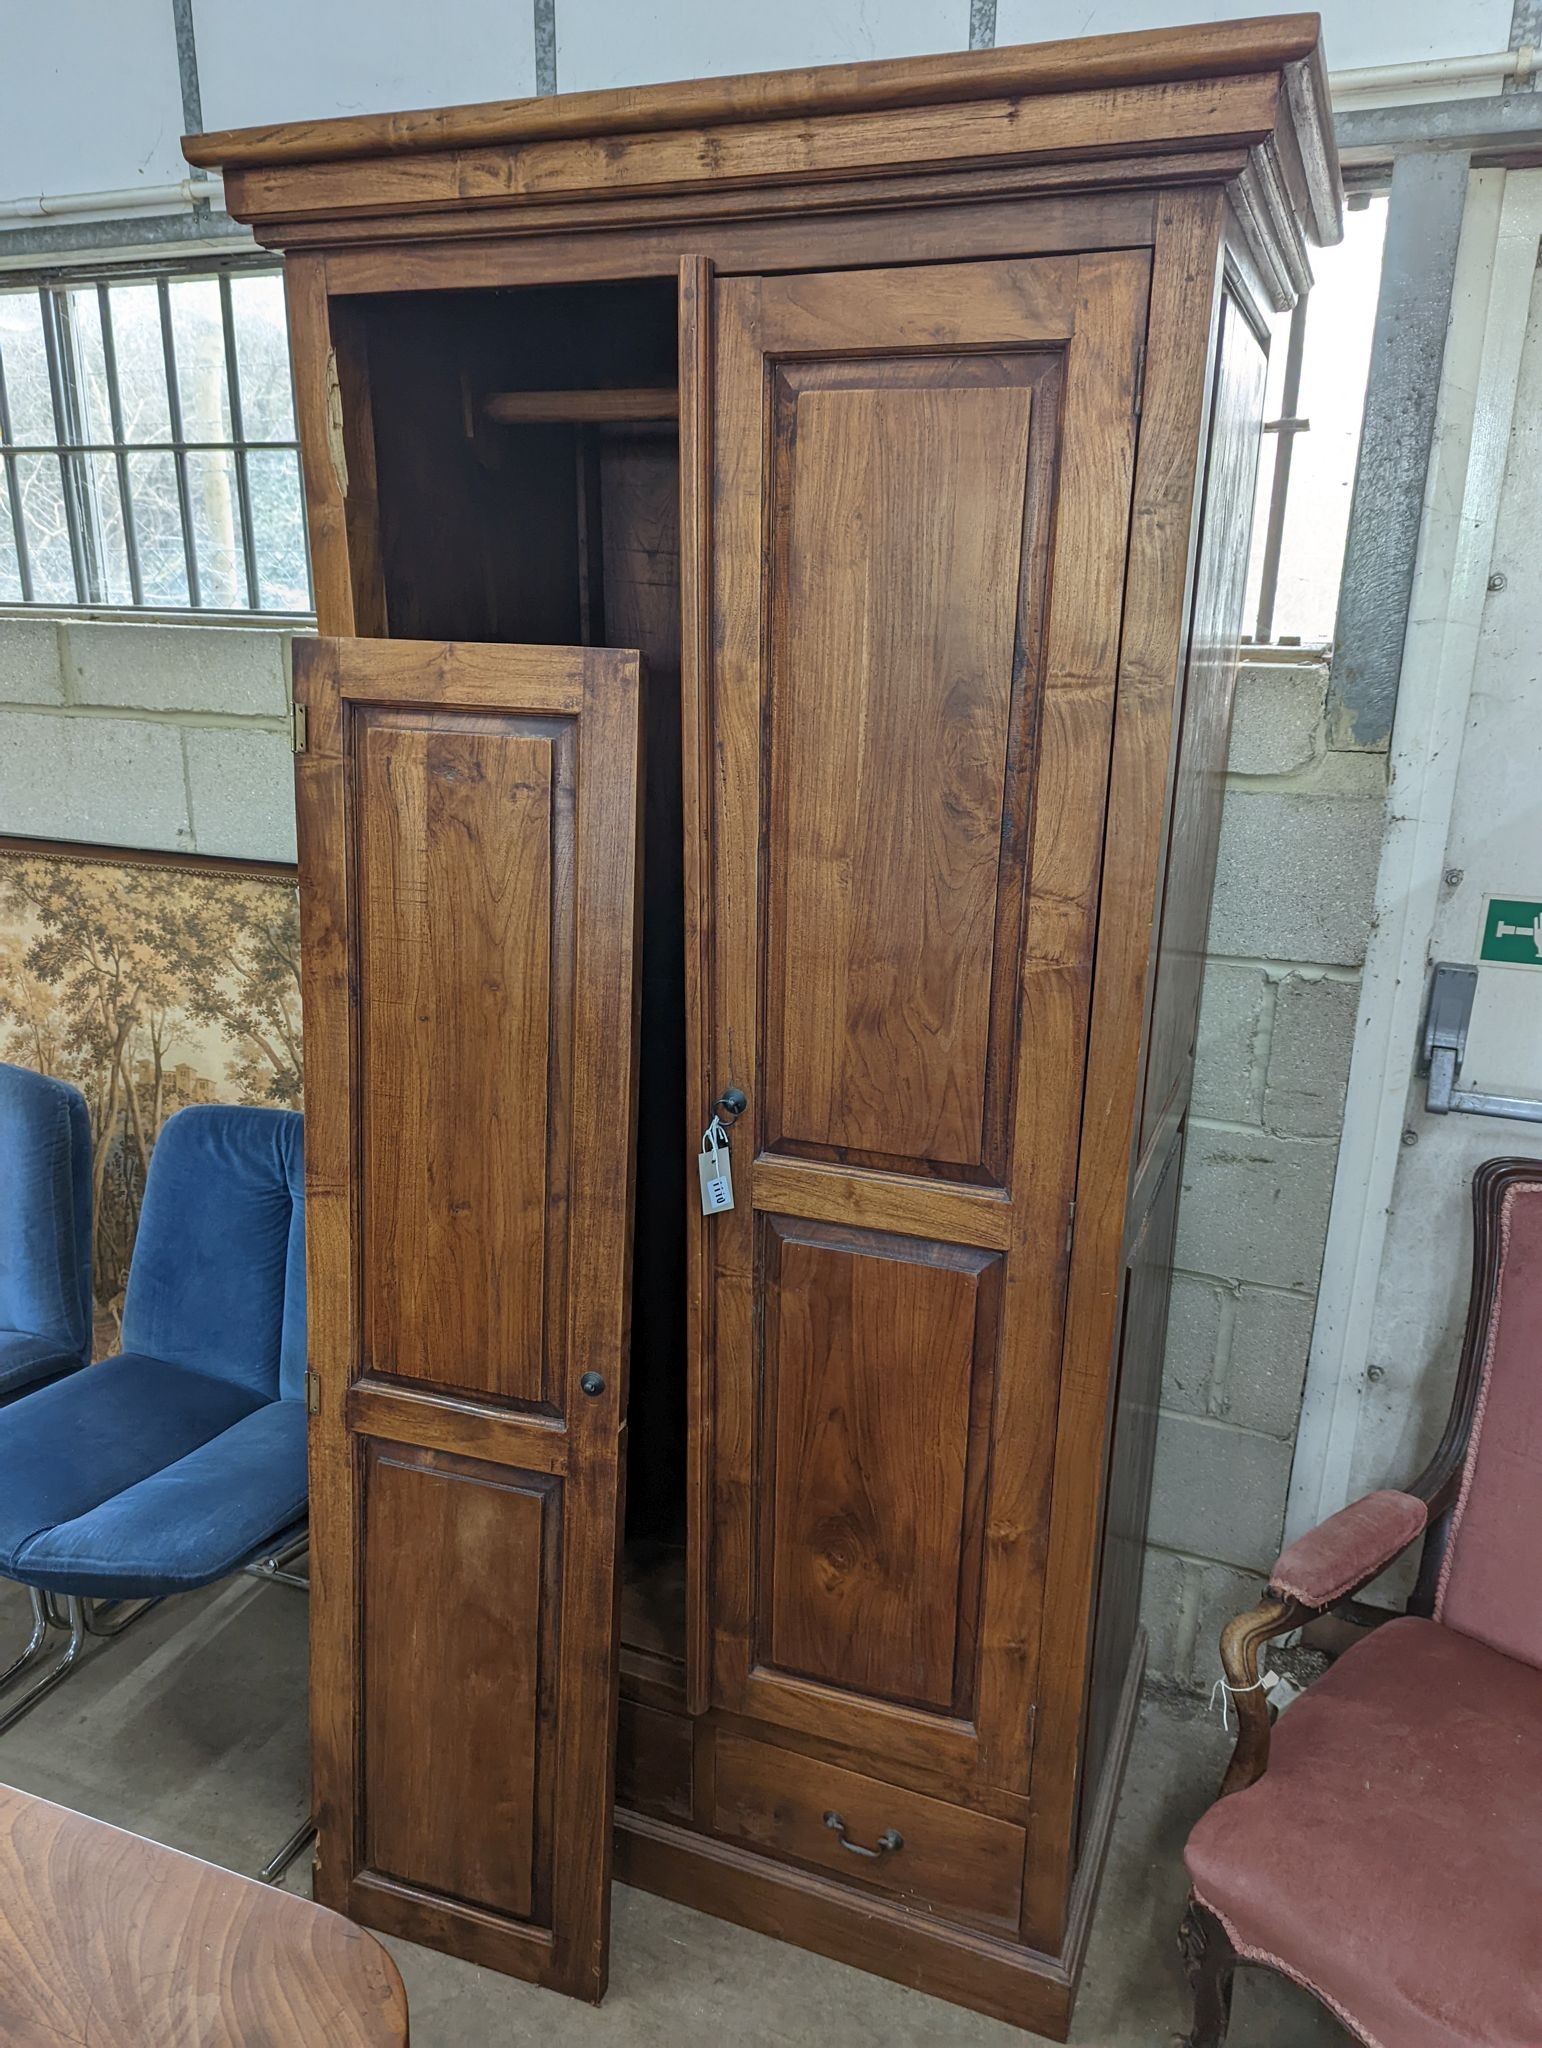 An Indonesian hardwood 2 door wardrobe (damaged), length 100cm, depth 66cm, height 200cm